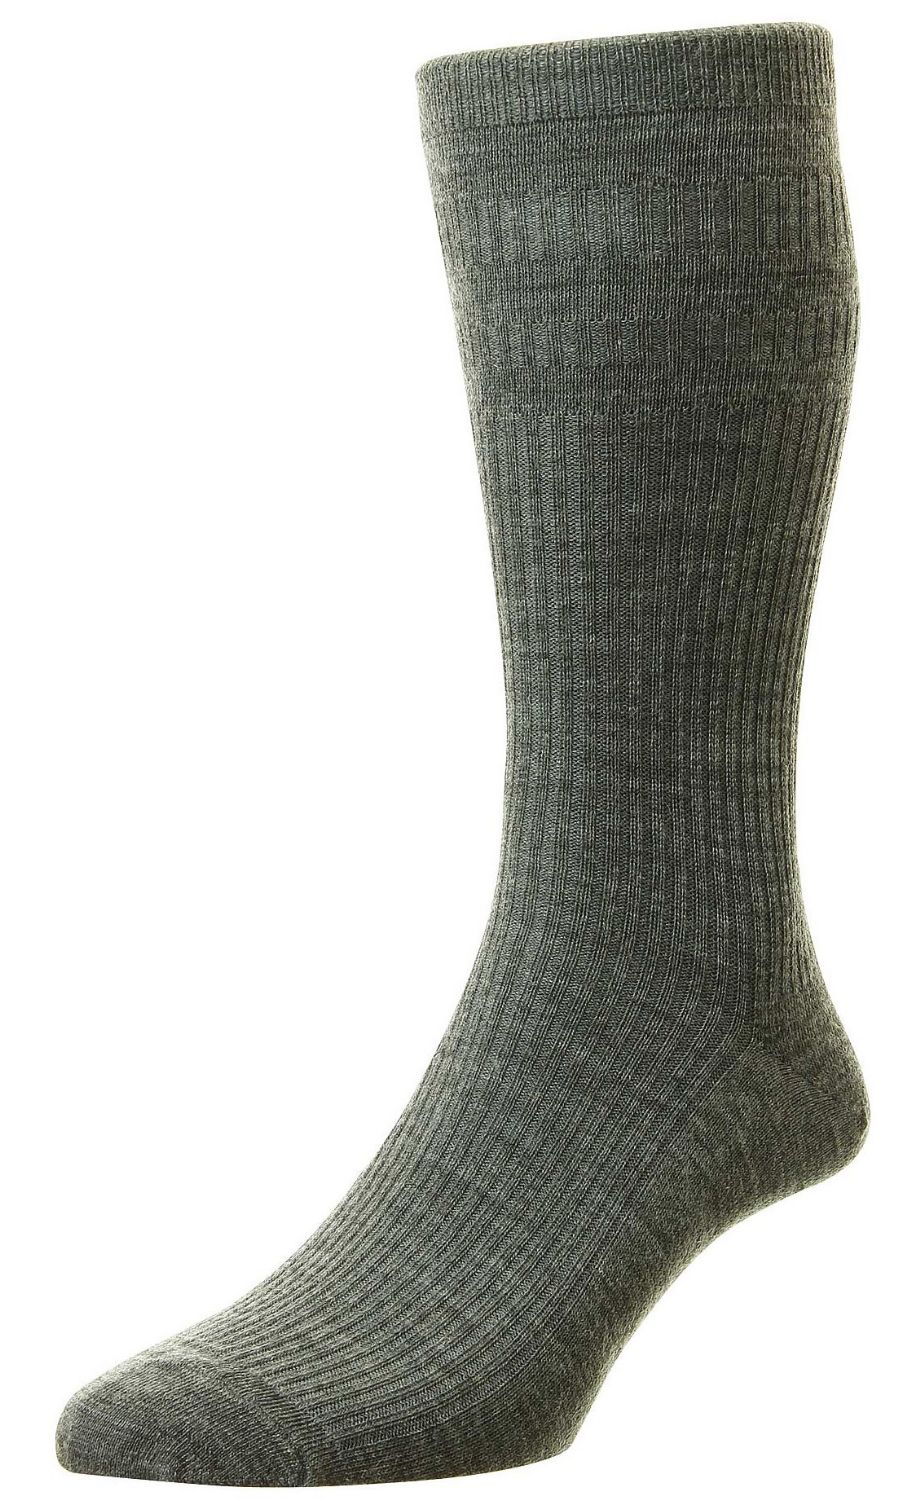 HJ90 Softop Socks Mid Grey size 6-11